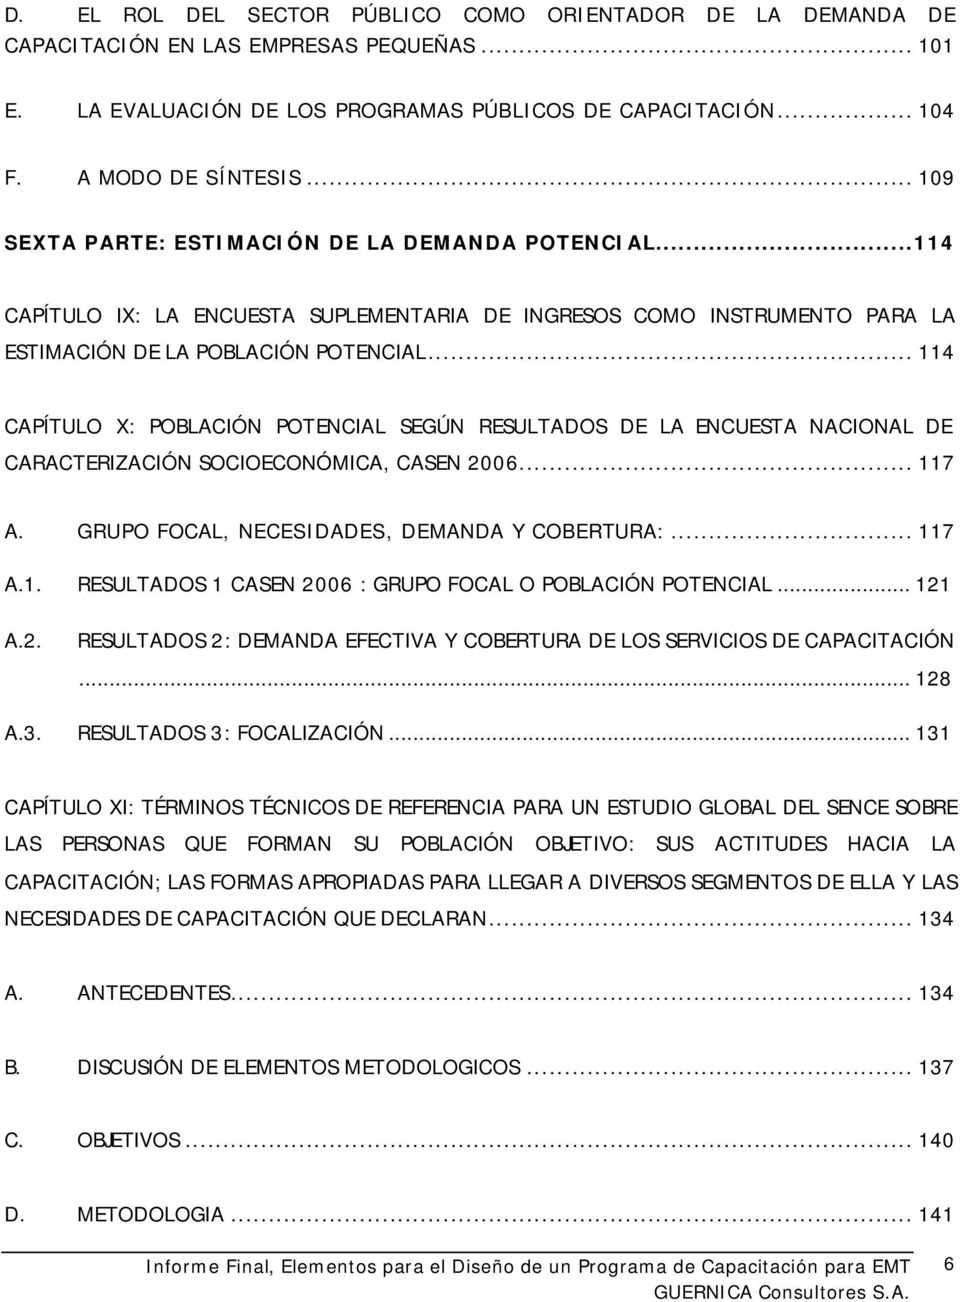 .. 114 CAPÍTULO X: POBLACIÓN POTENCIAL SEGÚN RESULTADOS DE LA ENCUESTA NACIONAL DE CARACTERIZACIÓN SOCIOECONÓMICA, CASEN 2006... 117 A. GRUPO FOCAL, NECESIDADES, DEMANDA Y COBERTURA:... 117 A.1. RESULTADOS 1 CASEN 2006 : GRUPO FOCAL O POBLACIÓN POTENCIAL.